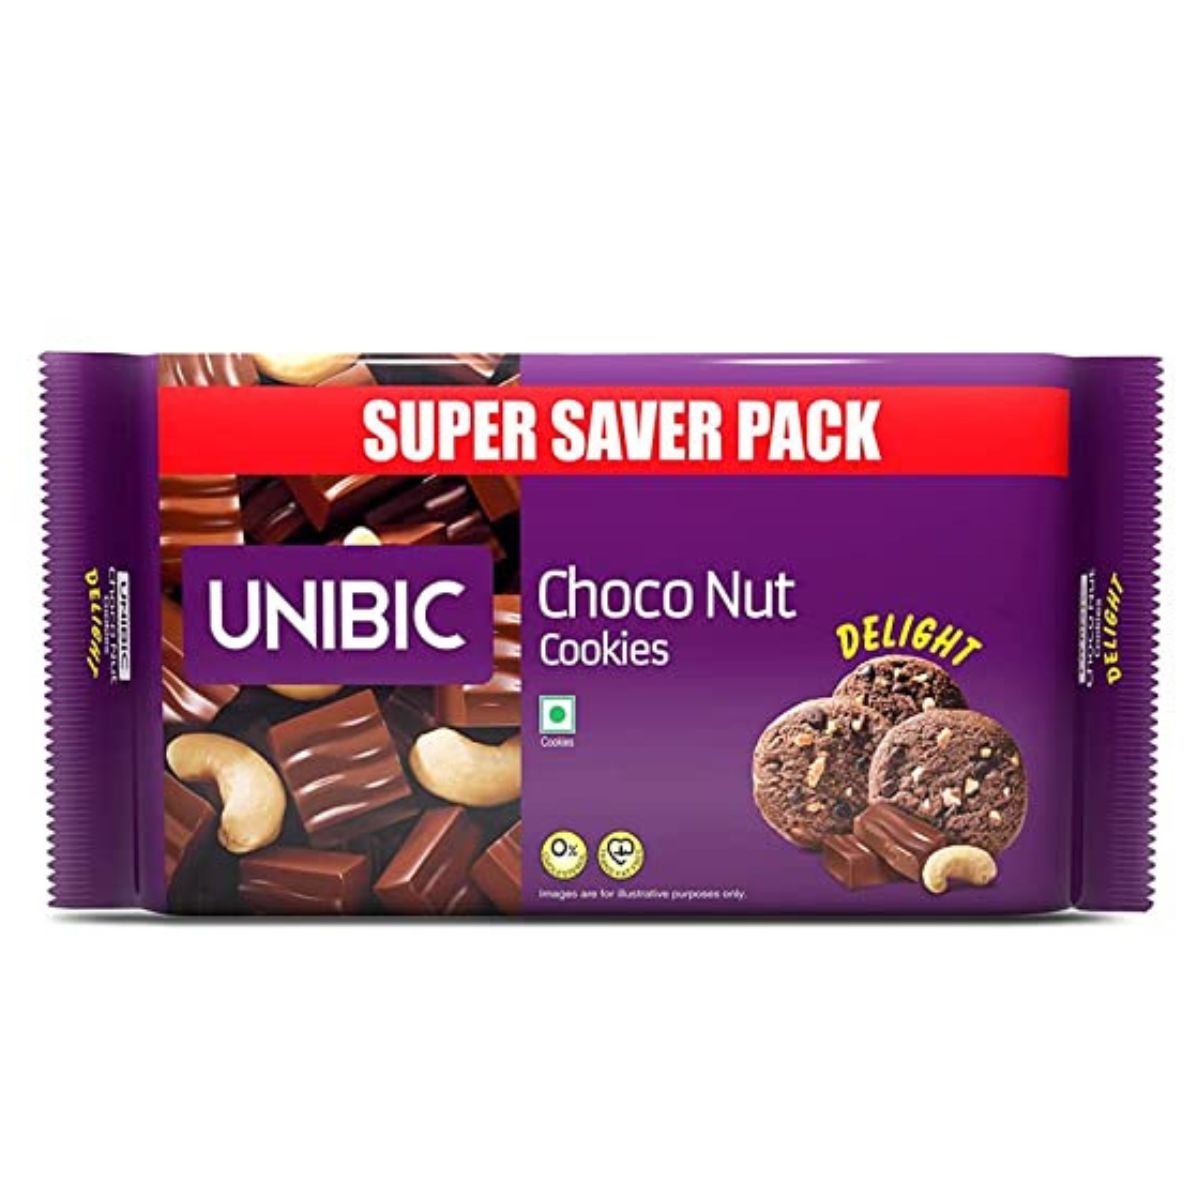 Unibic - Choco Nut Cookies - Super Saver Pack - 500g